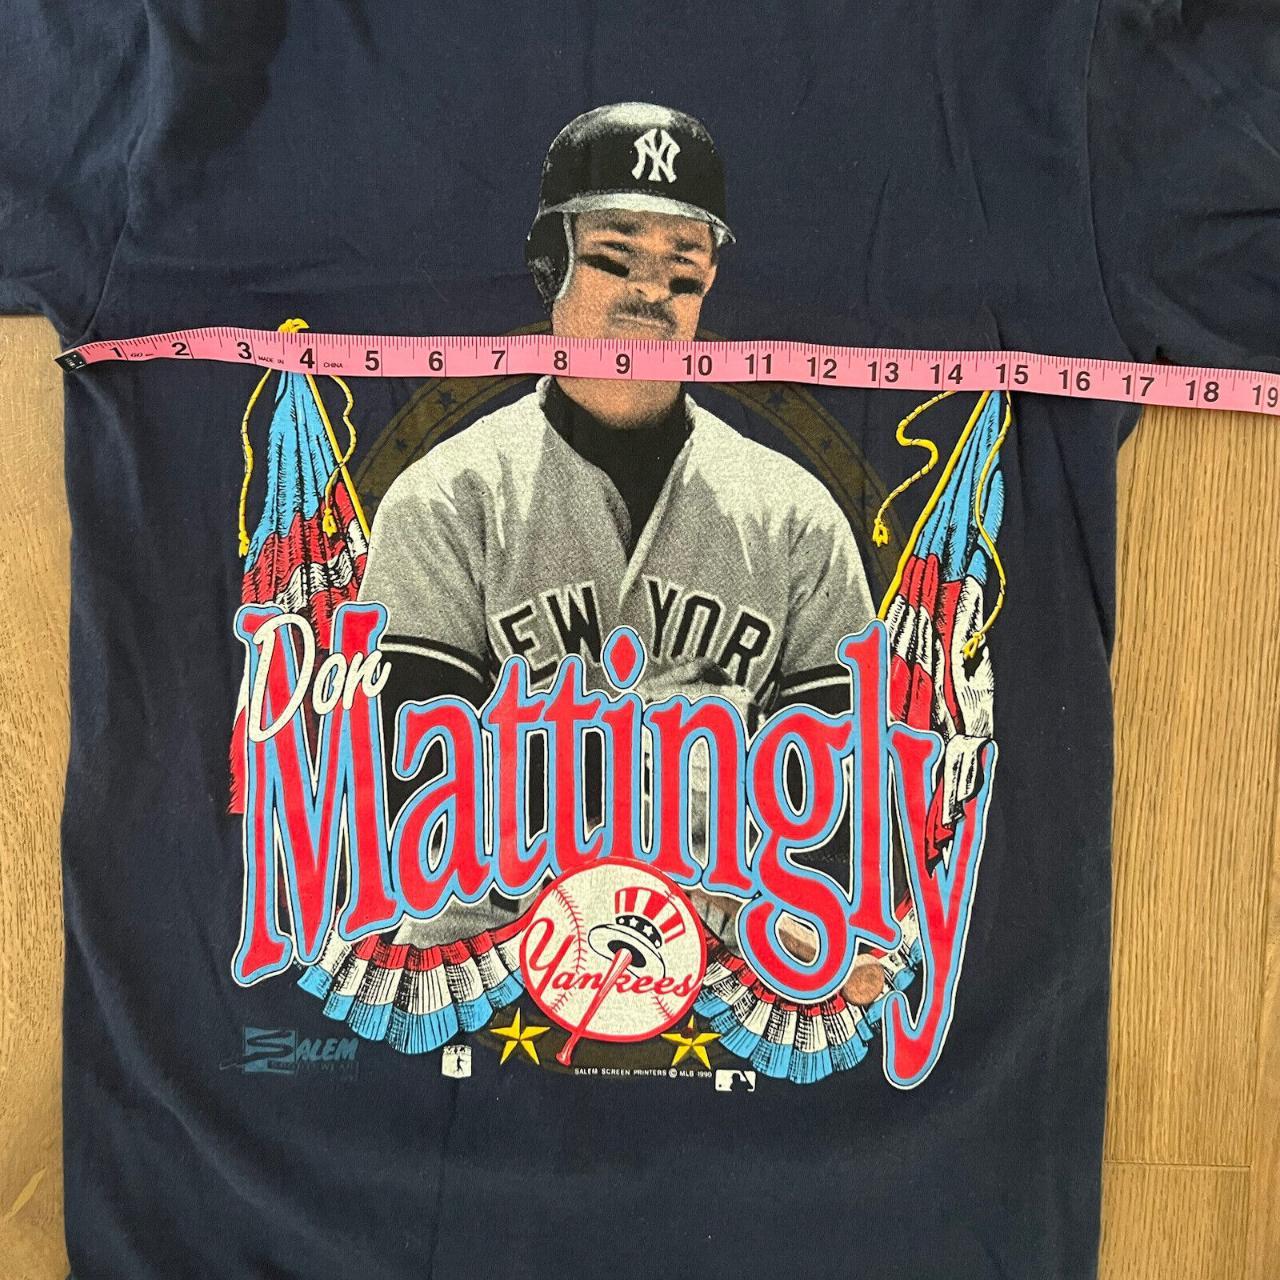 Don Mattingly New York Yankees jersey. Amazing - Depop